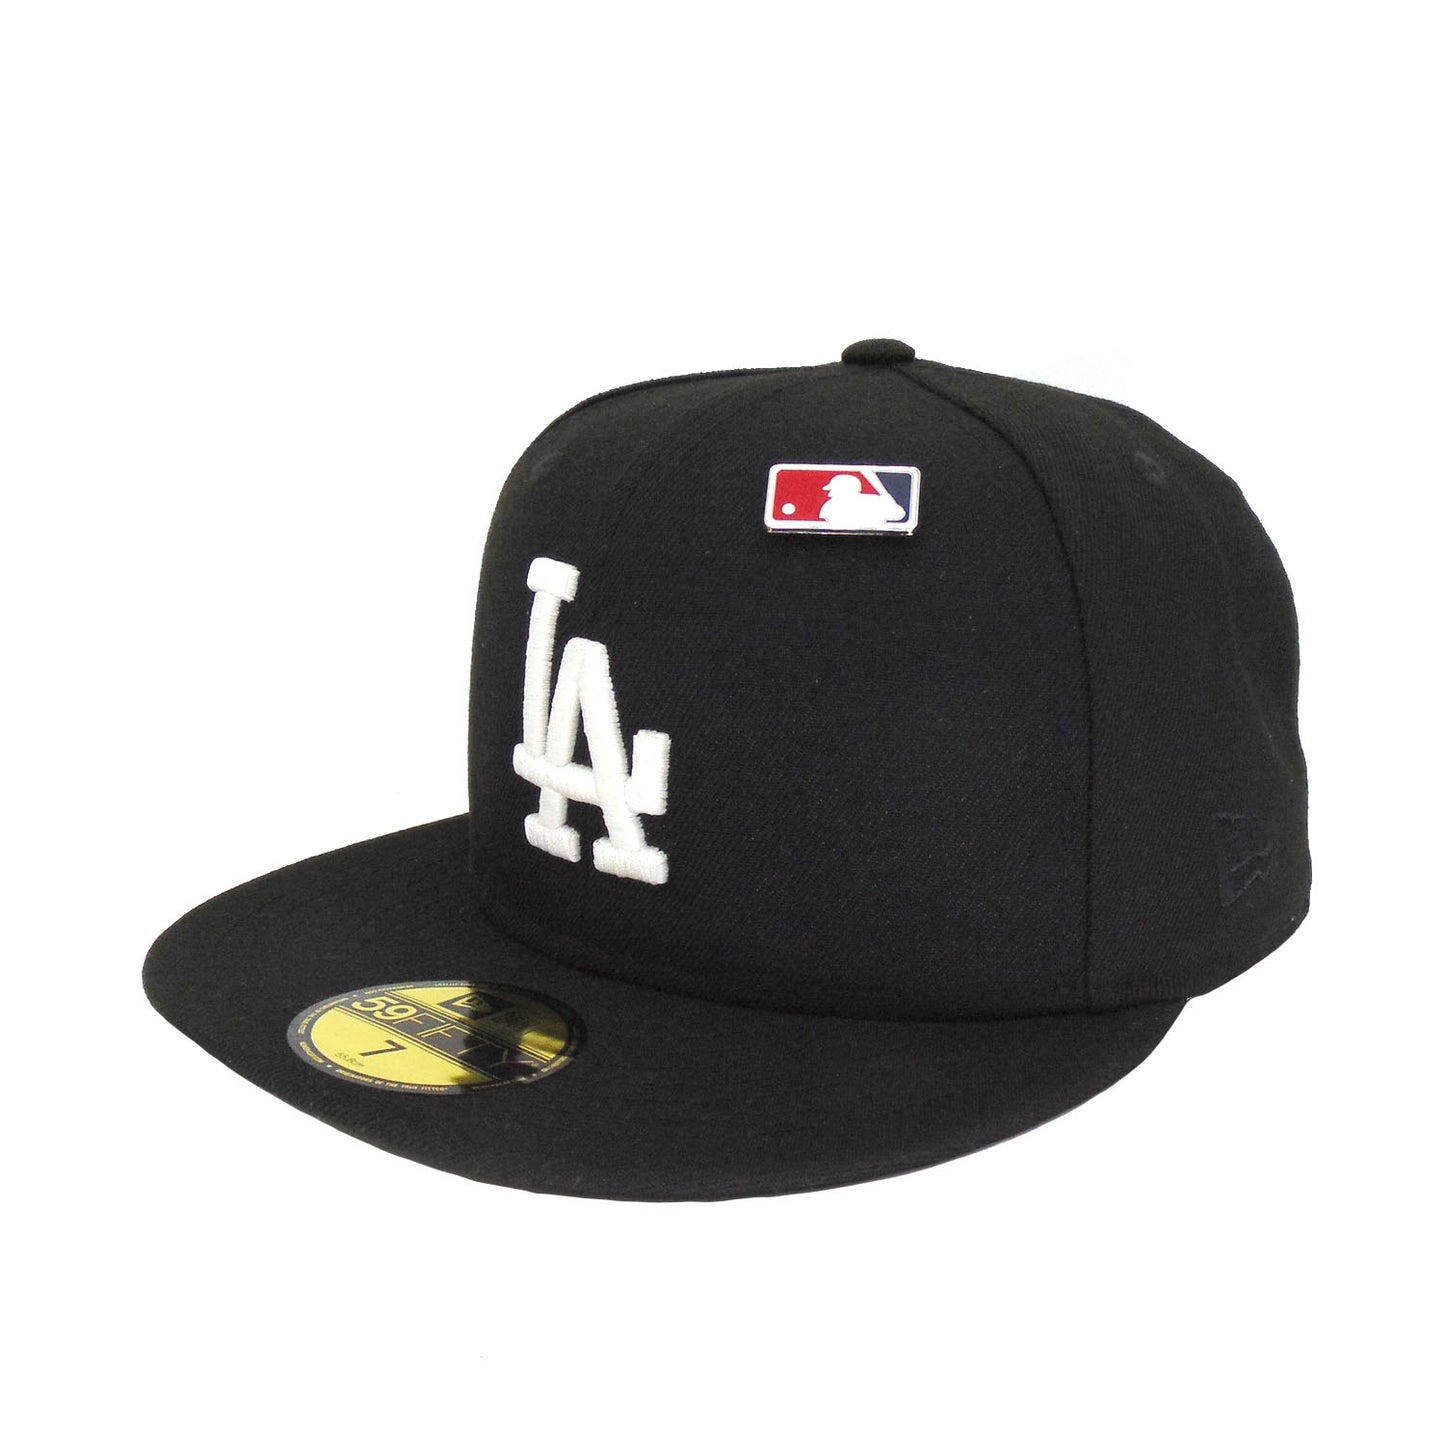 Los Angeles Dodgers Exclusive New Era Cap Black Glow